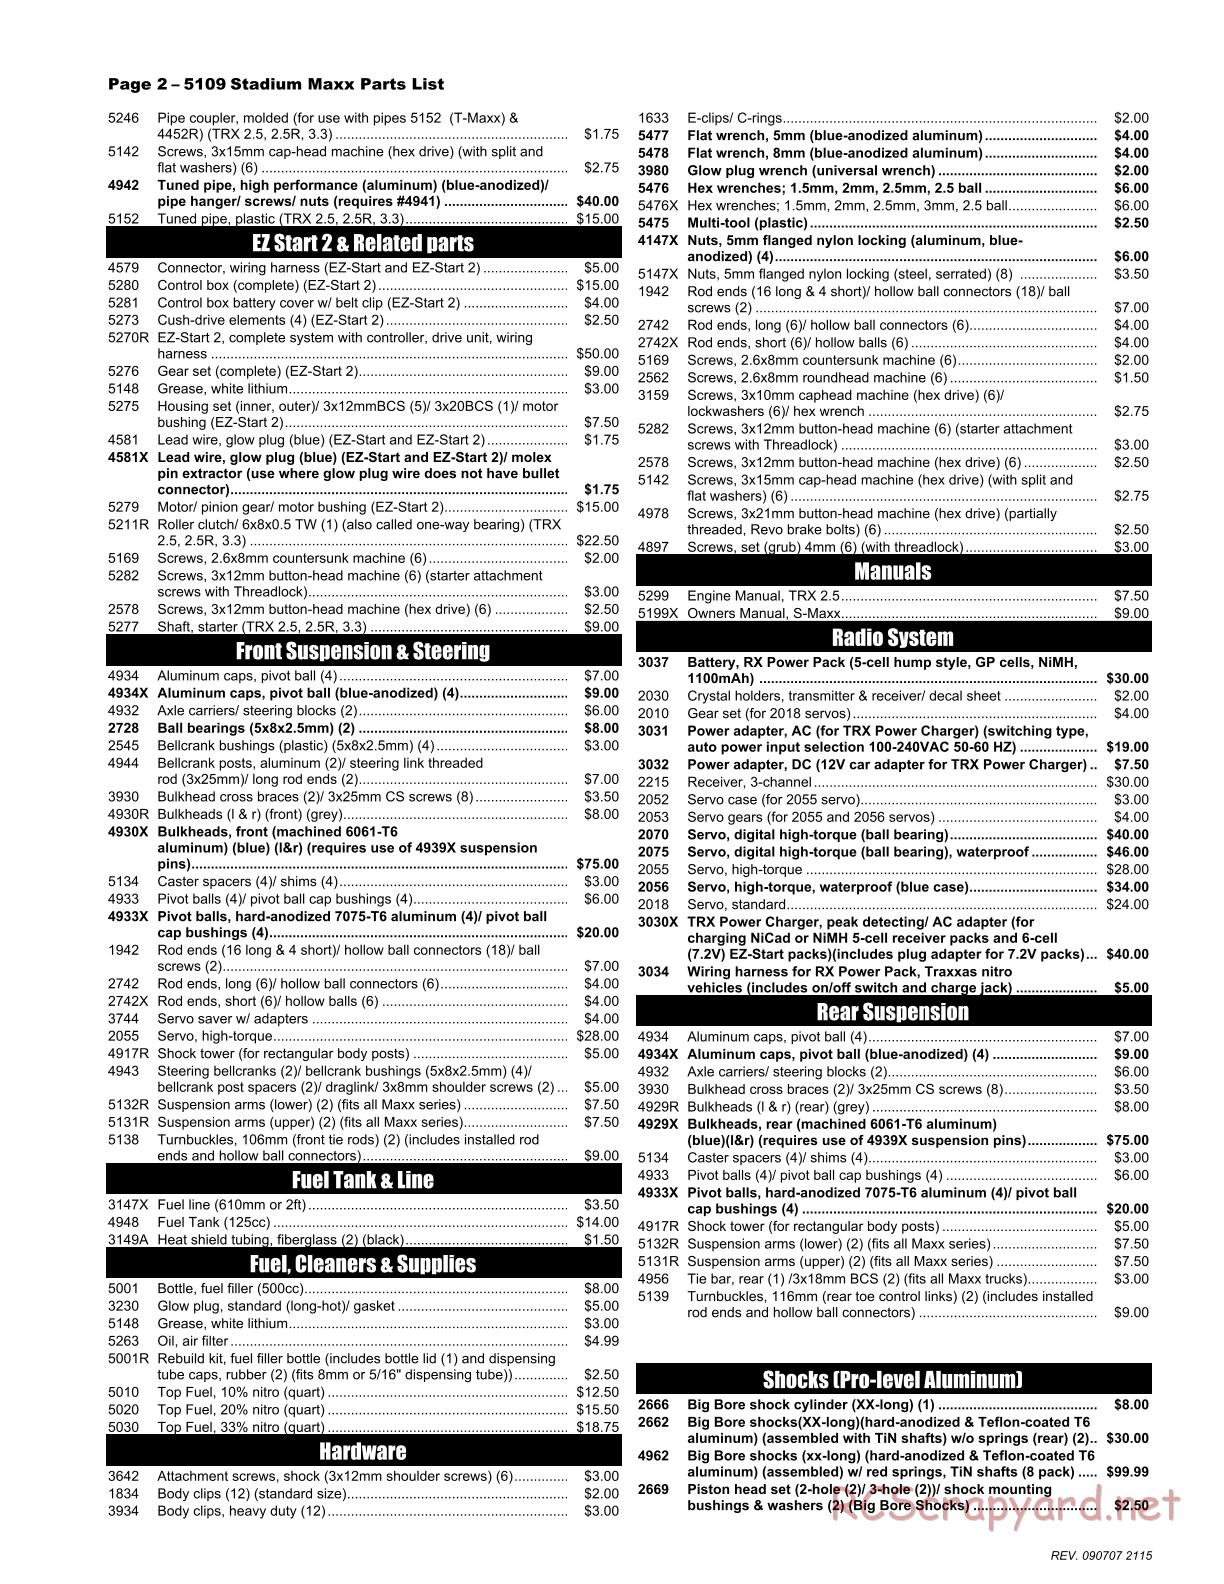 Traxxas - S-Maxx 5109 - Parts List - Page 2